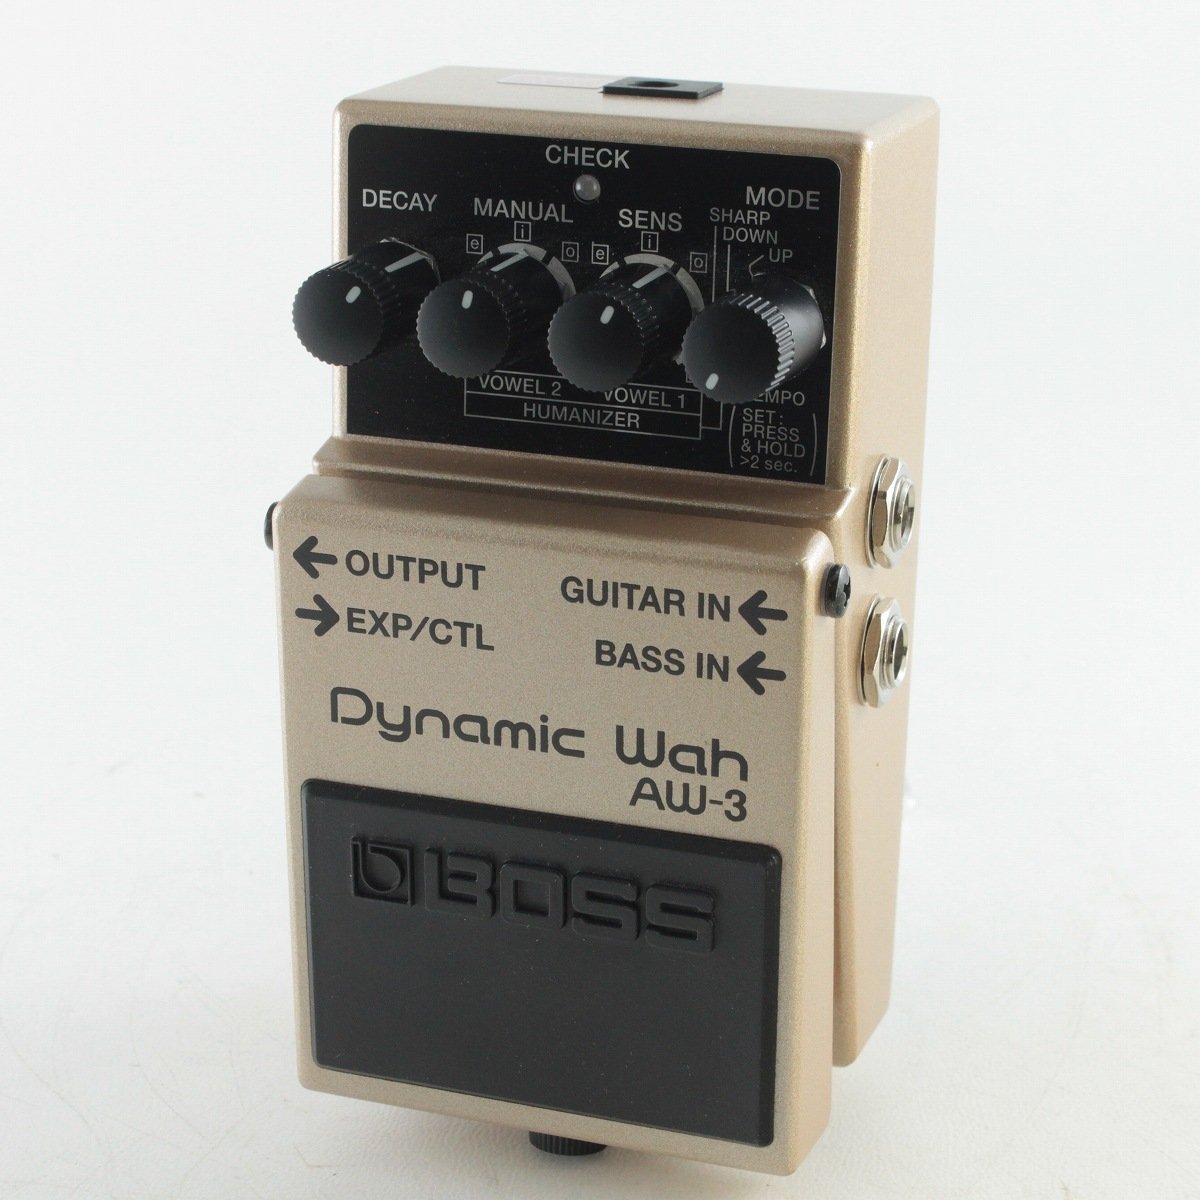 AW-3 (Dynamic Wah) - 配信機器・PA機器・レコーディング機器